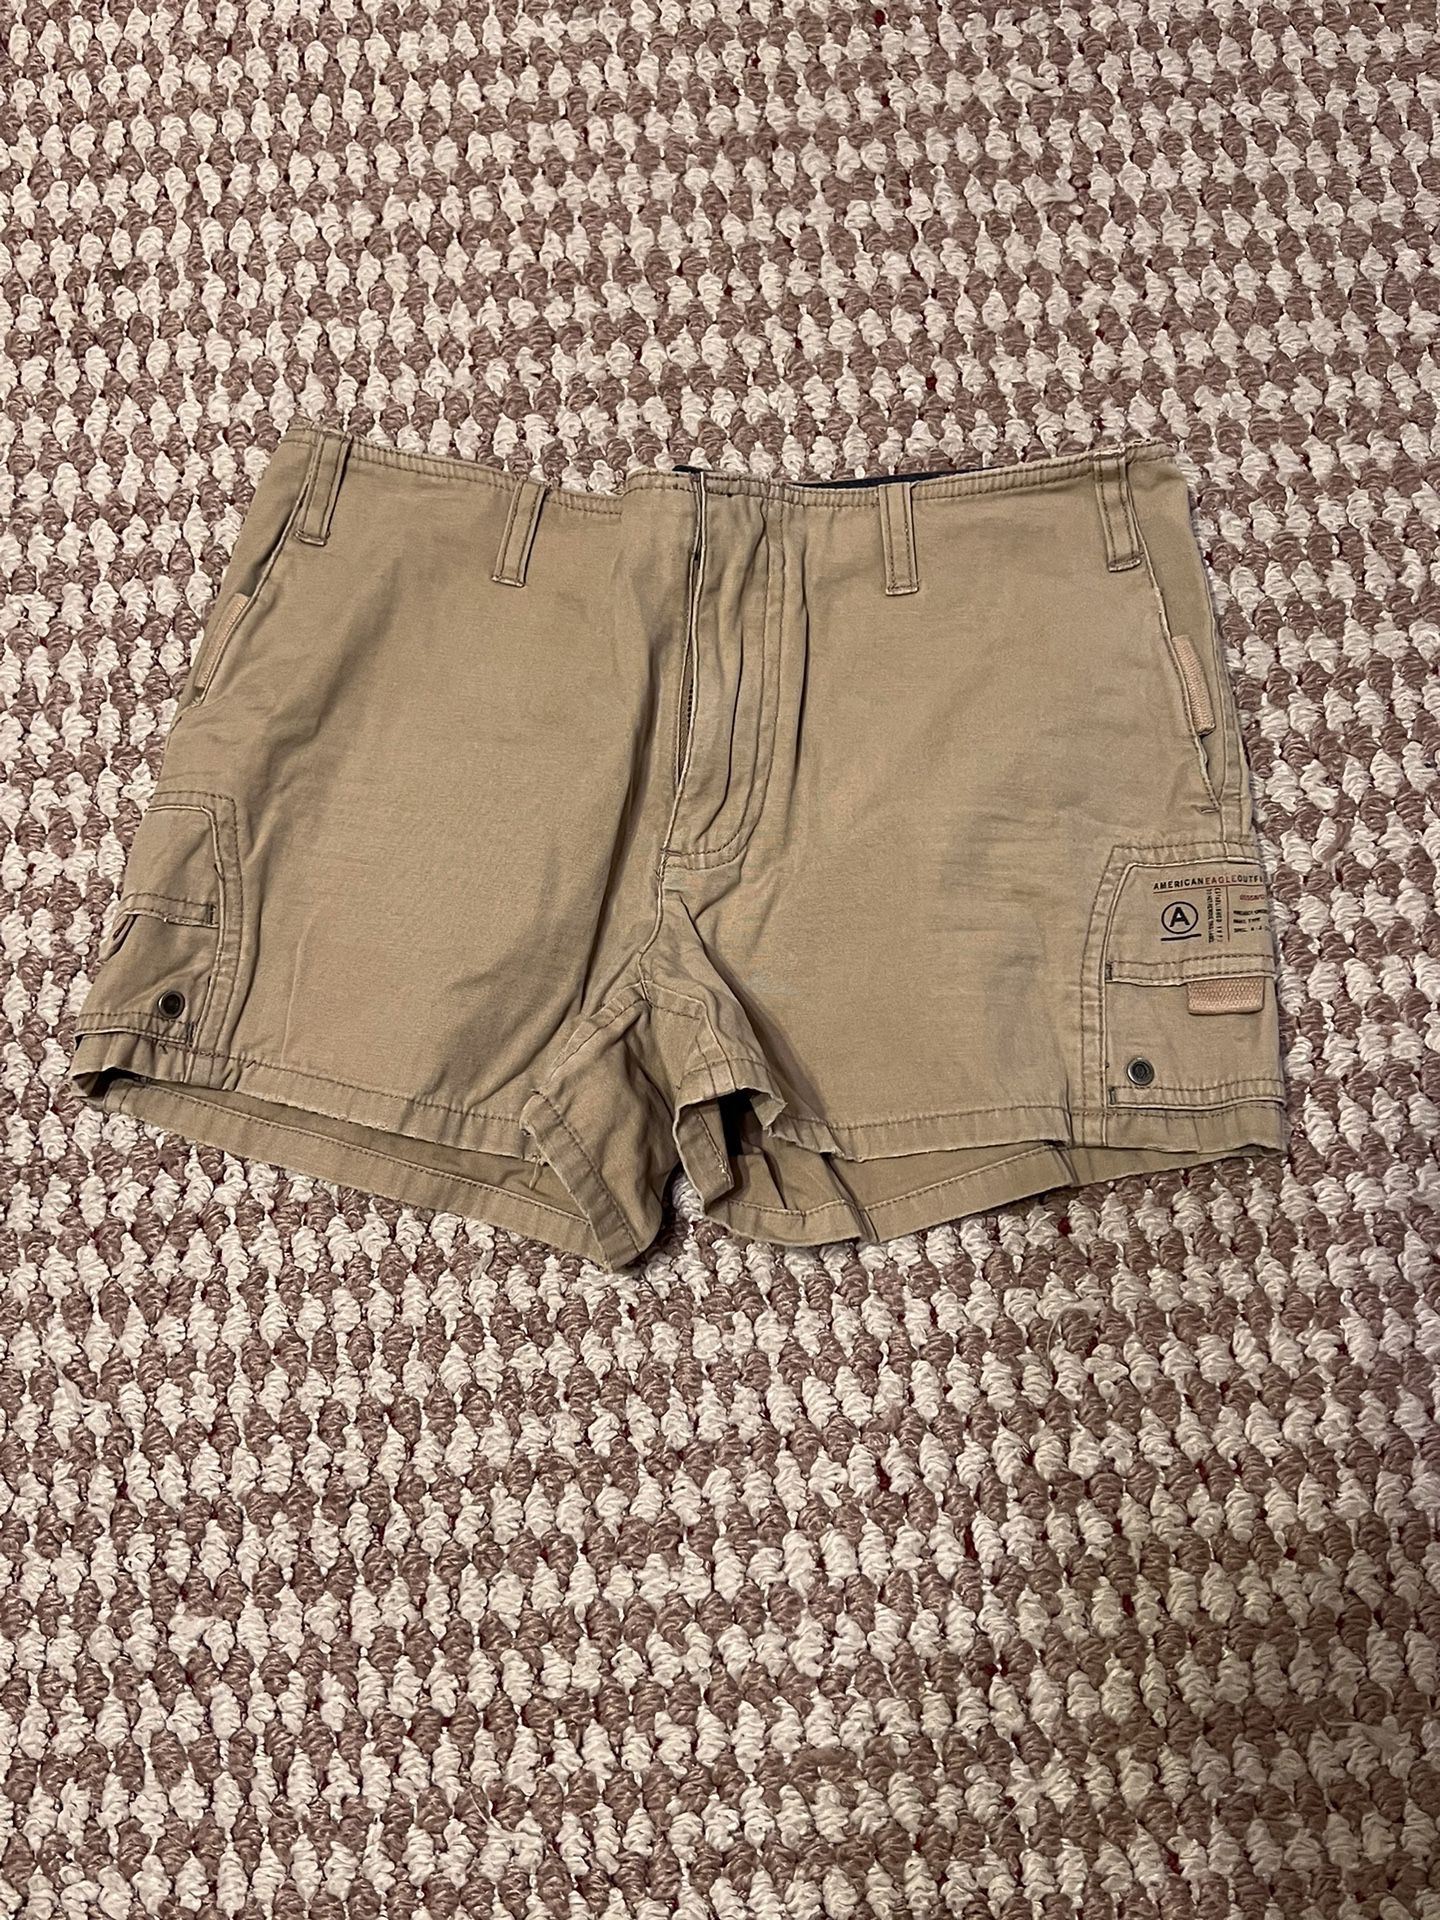 American Eagle Shorts, size 2